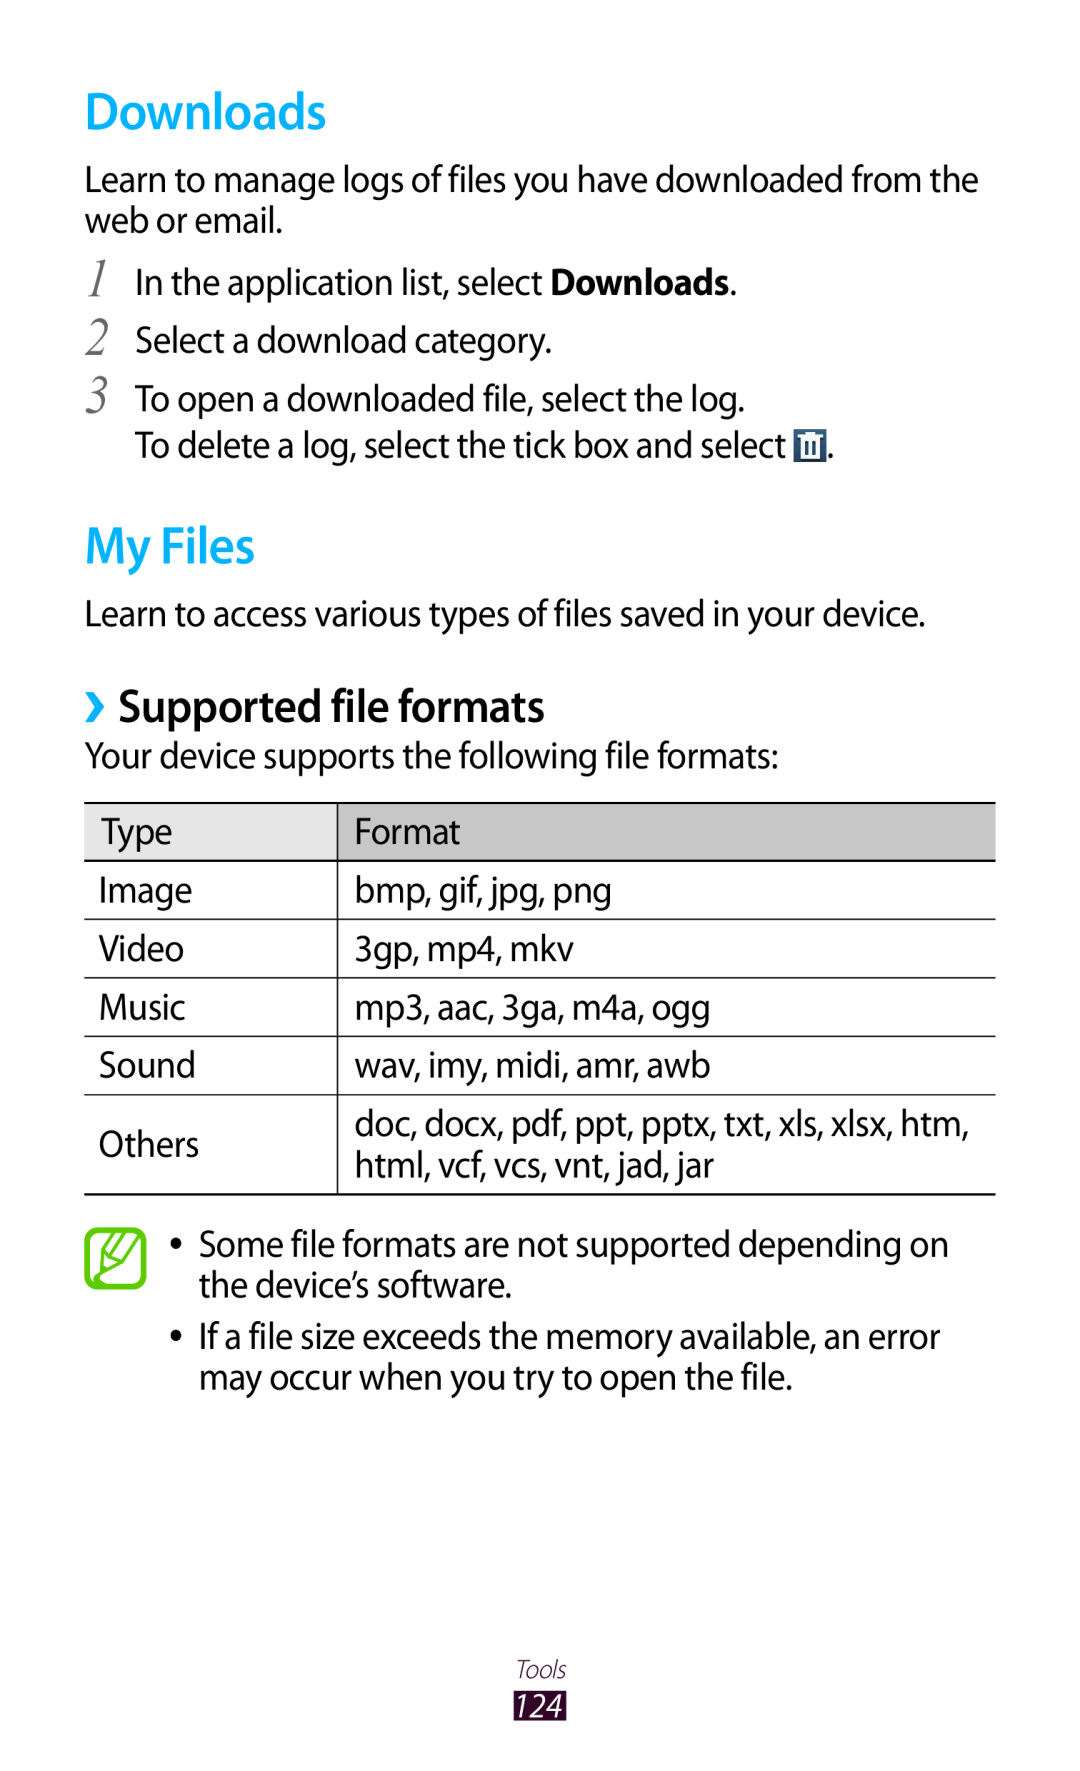 Samsung GT-S7560UWAVDC, GT-S7560ZKAVDR, GT-S7560ZKAPRT, GT-S7560UWAWIN manual Downloads, My Files, ››Supported file formats 